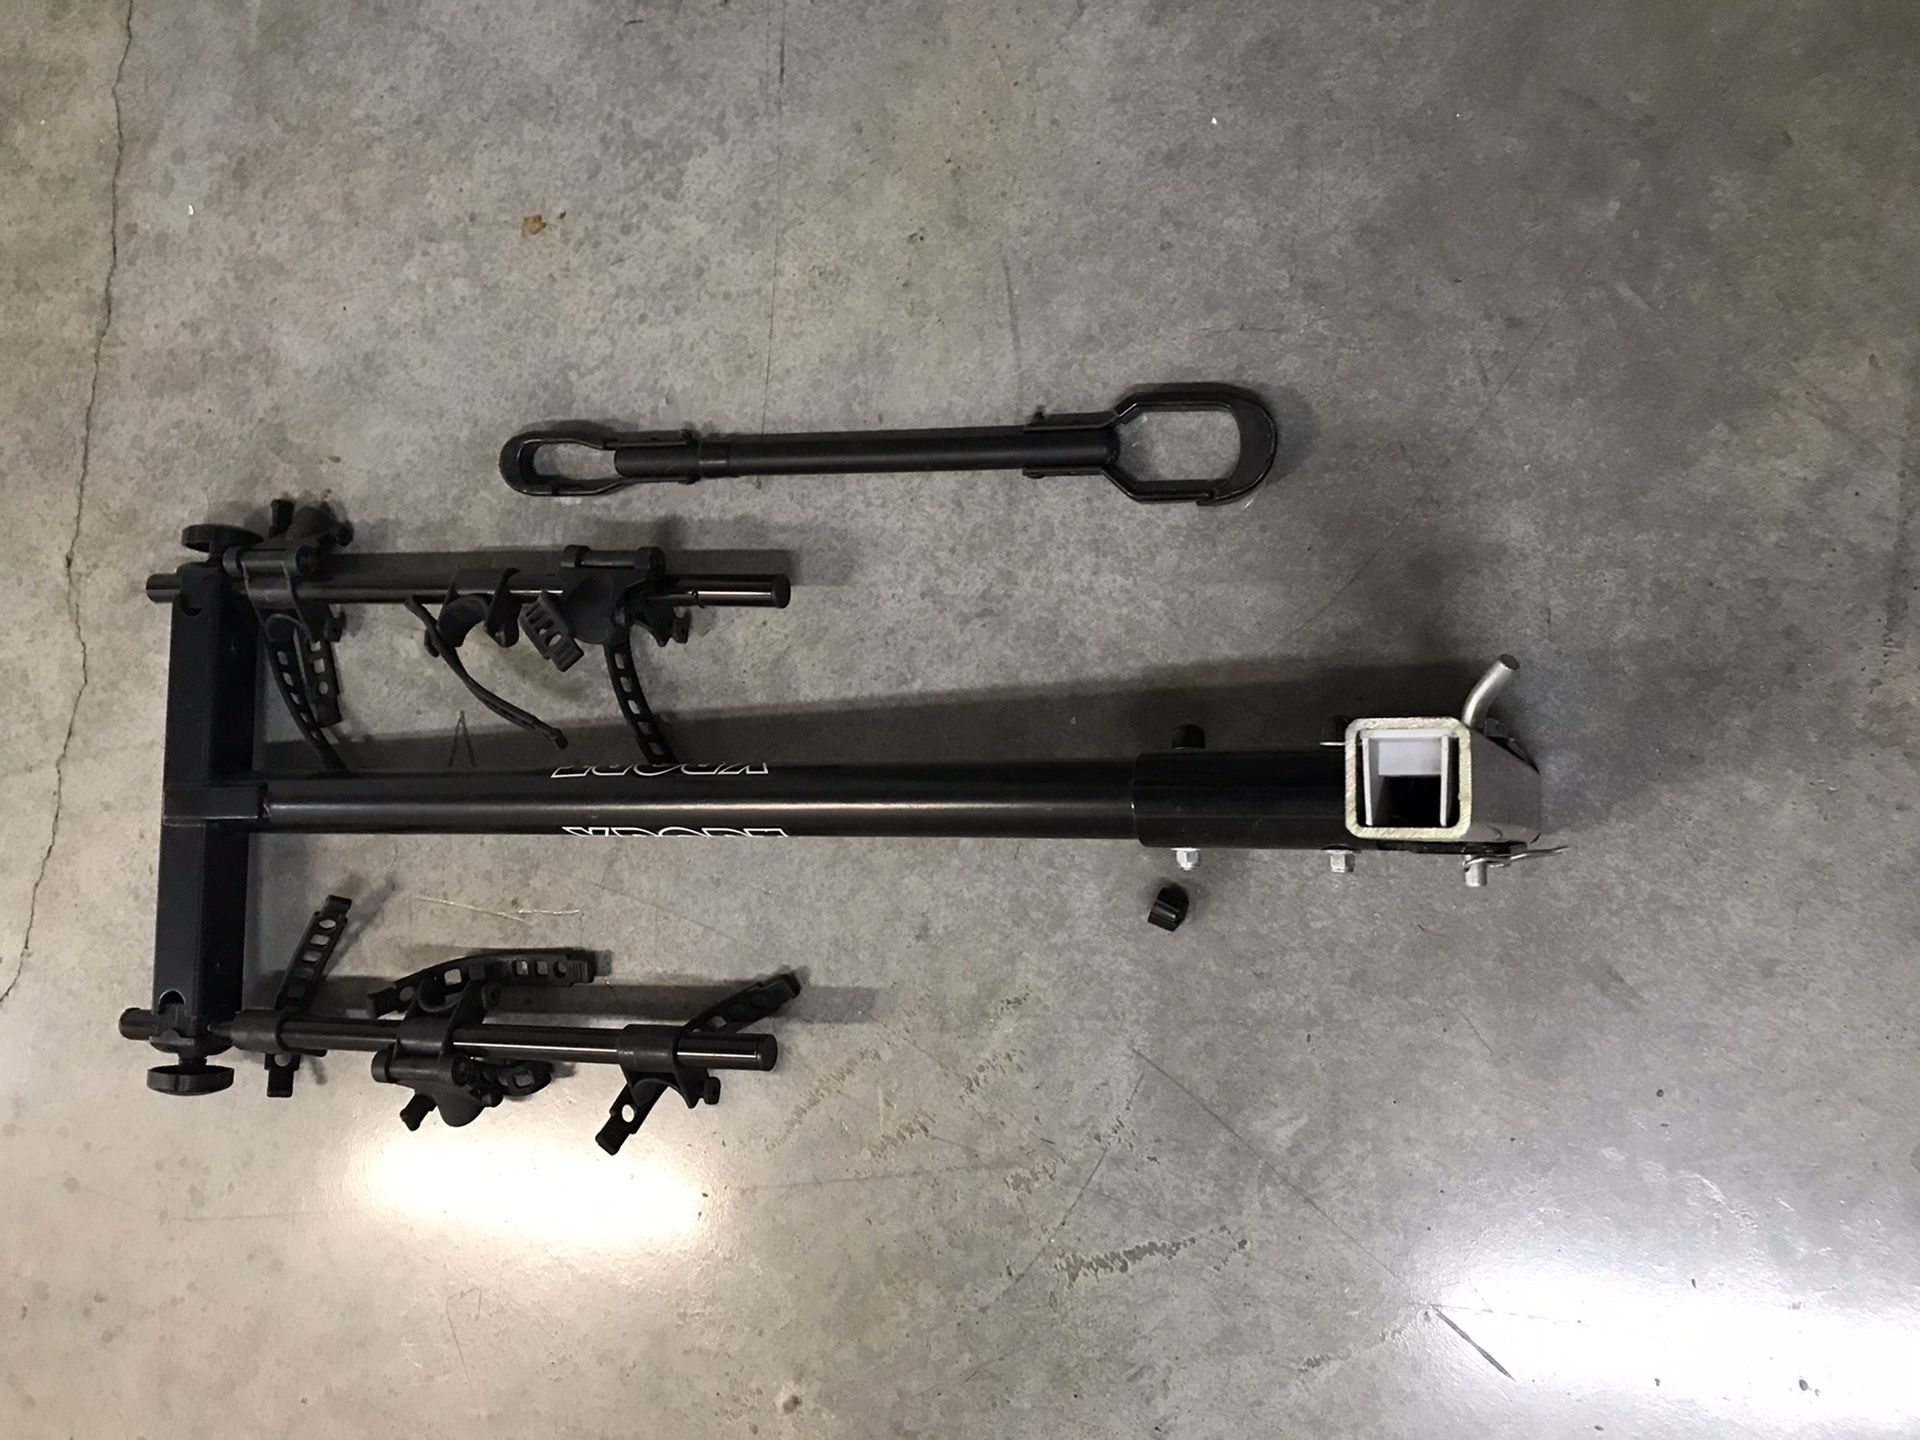 Xport 3-bike hitch rack